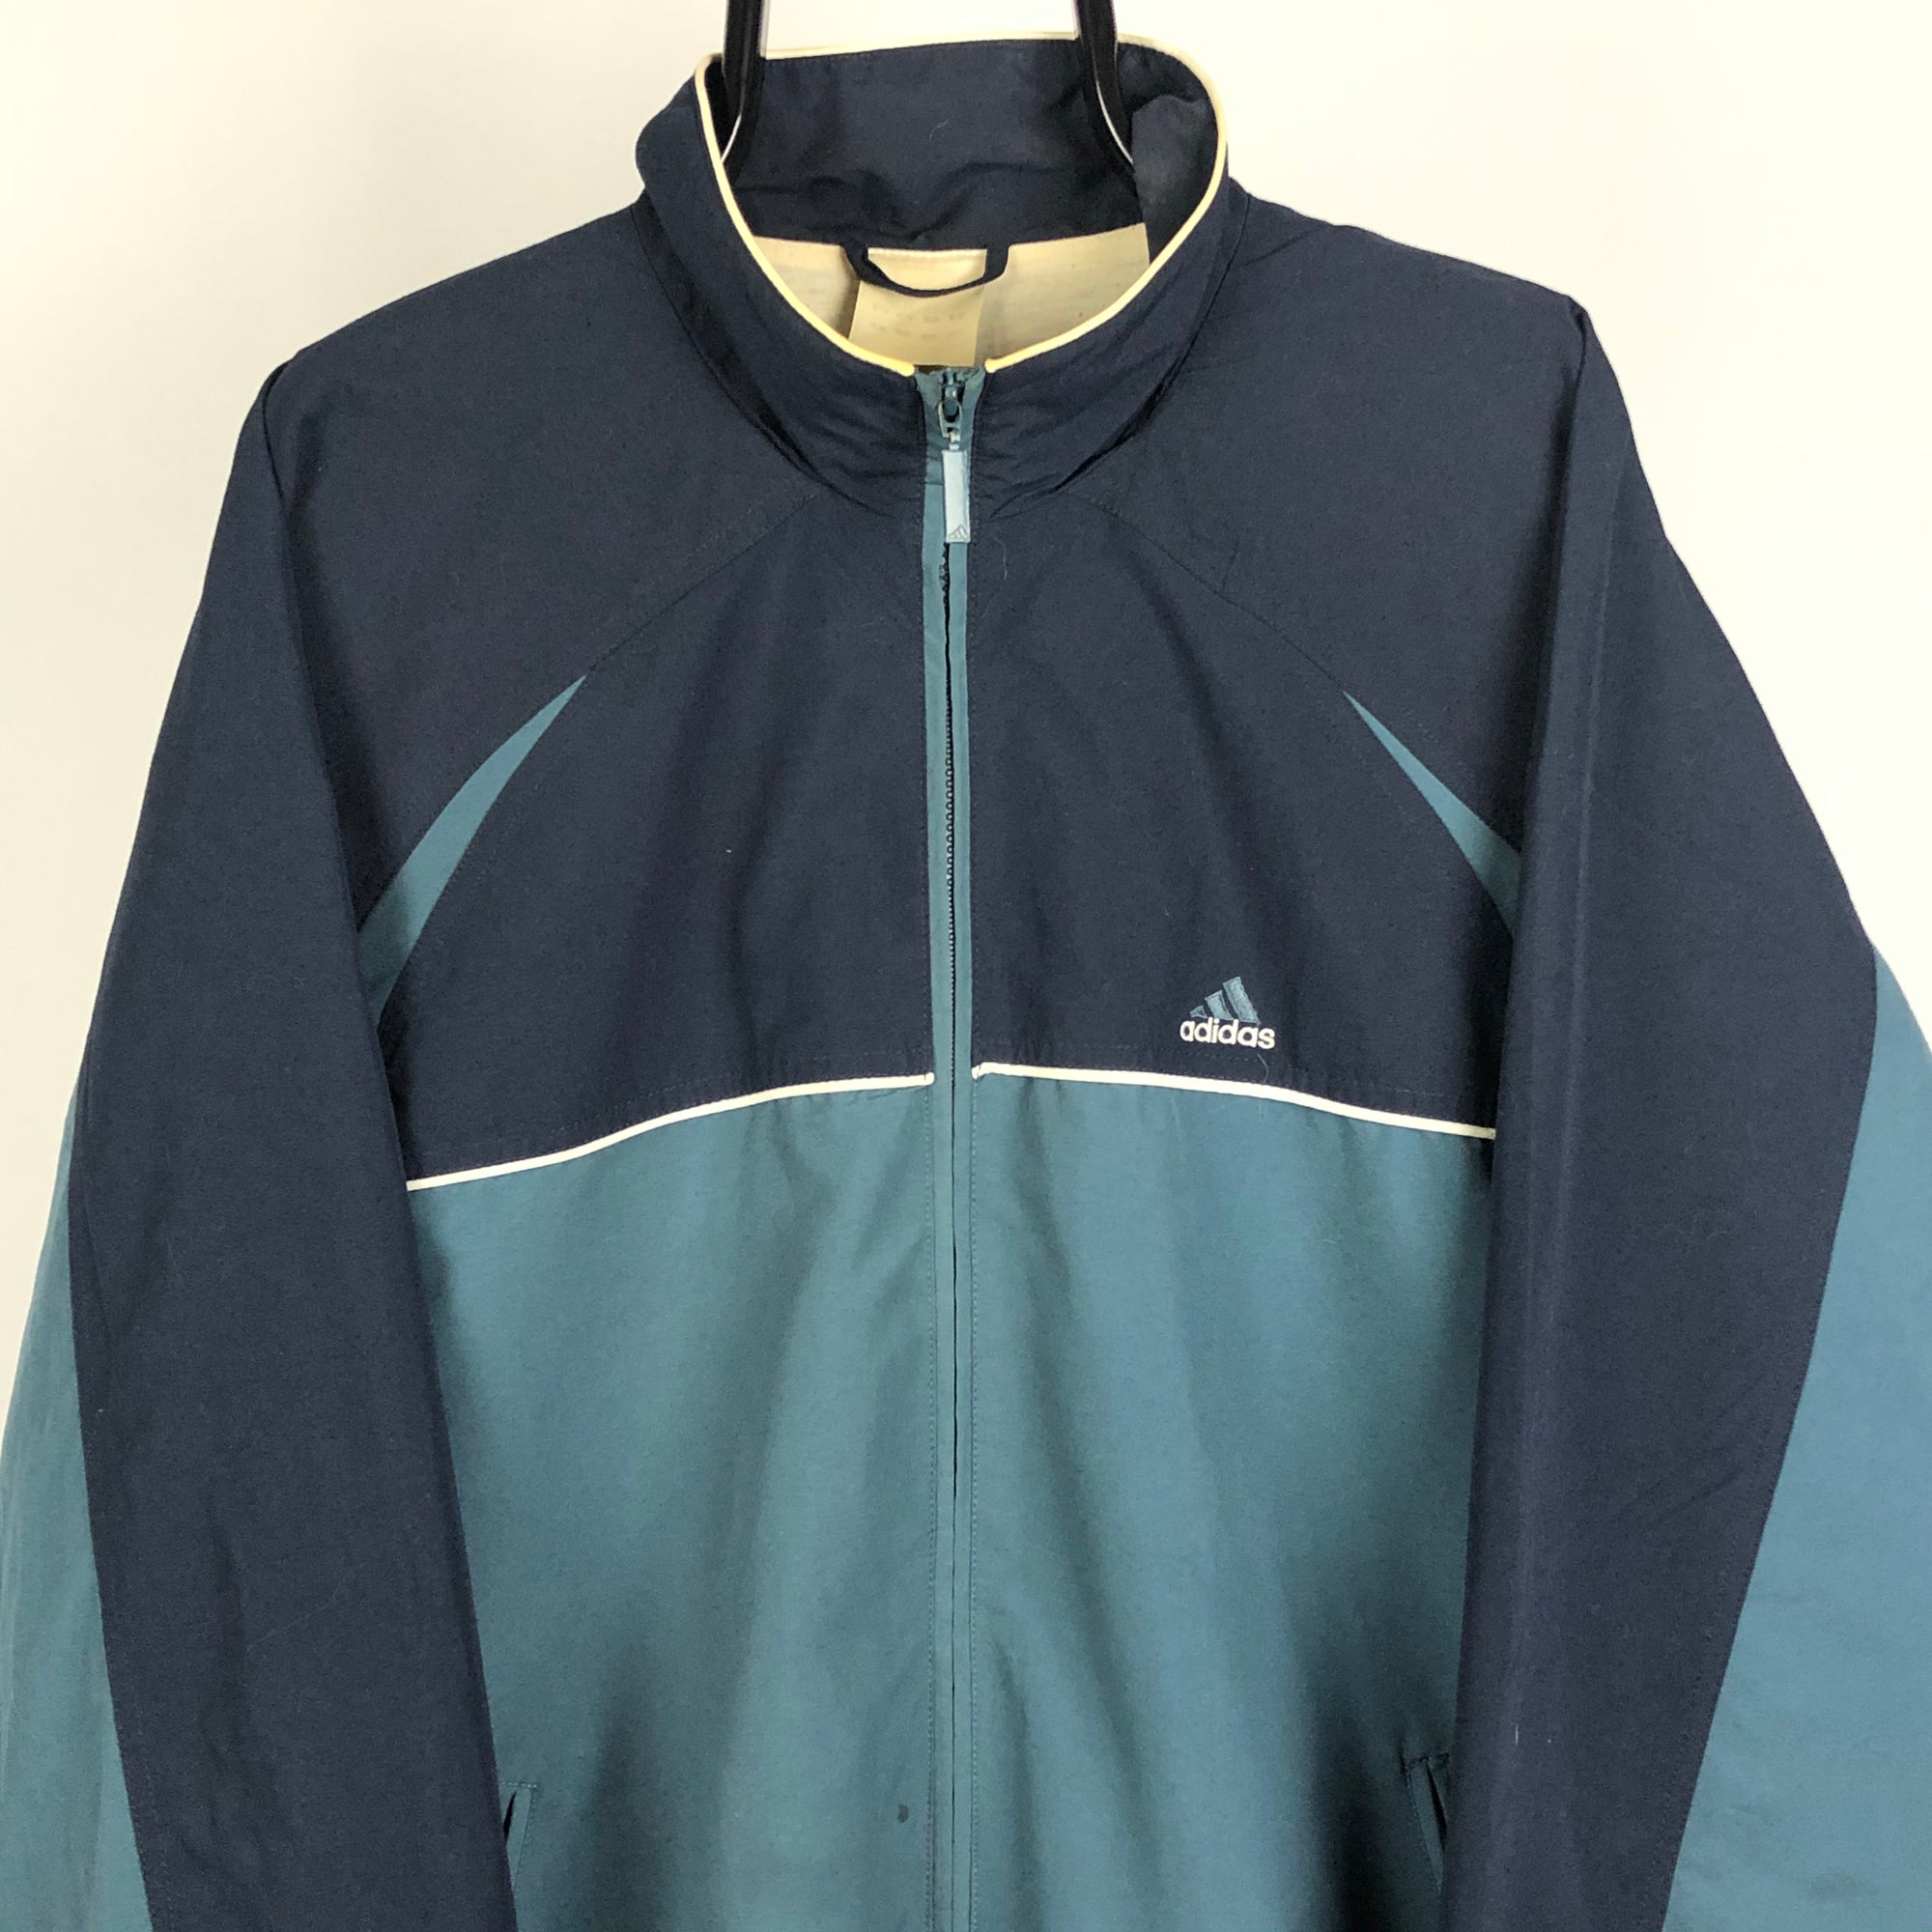 Vintage Adidas Track Jacket in Green/Blue - Men's Large/Women's XL